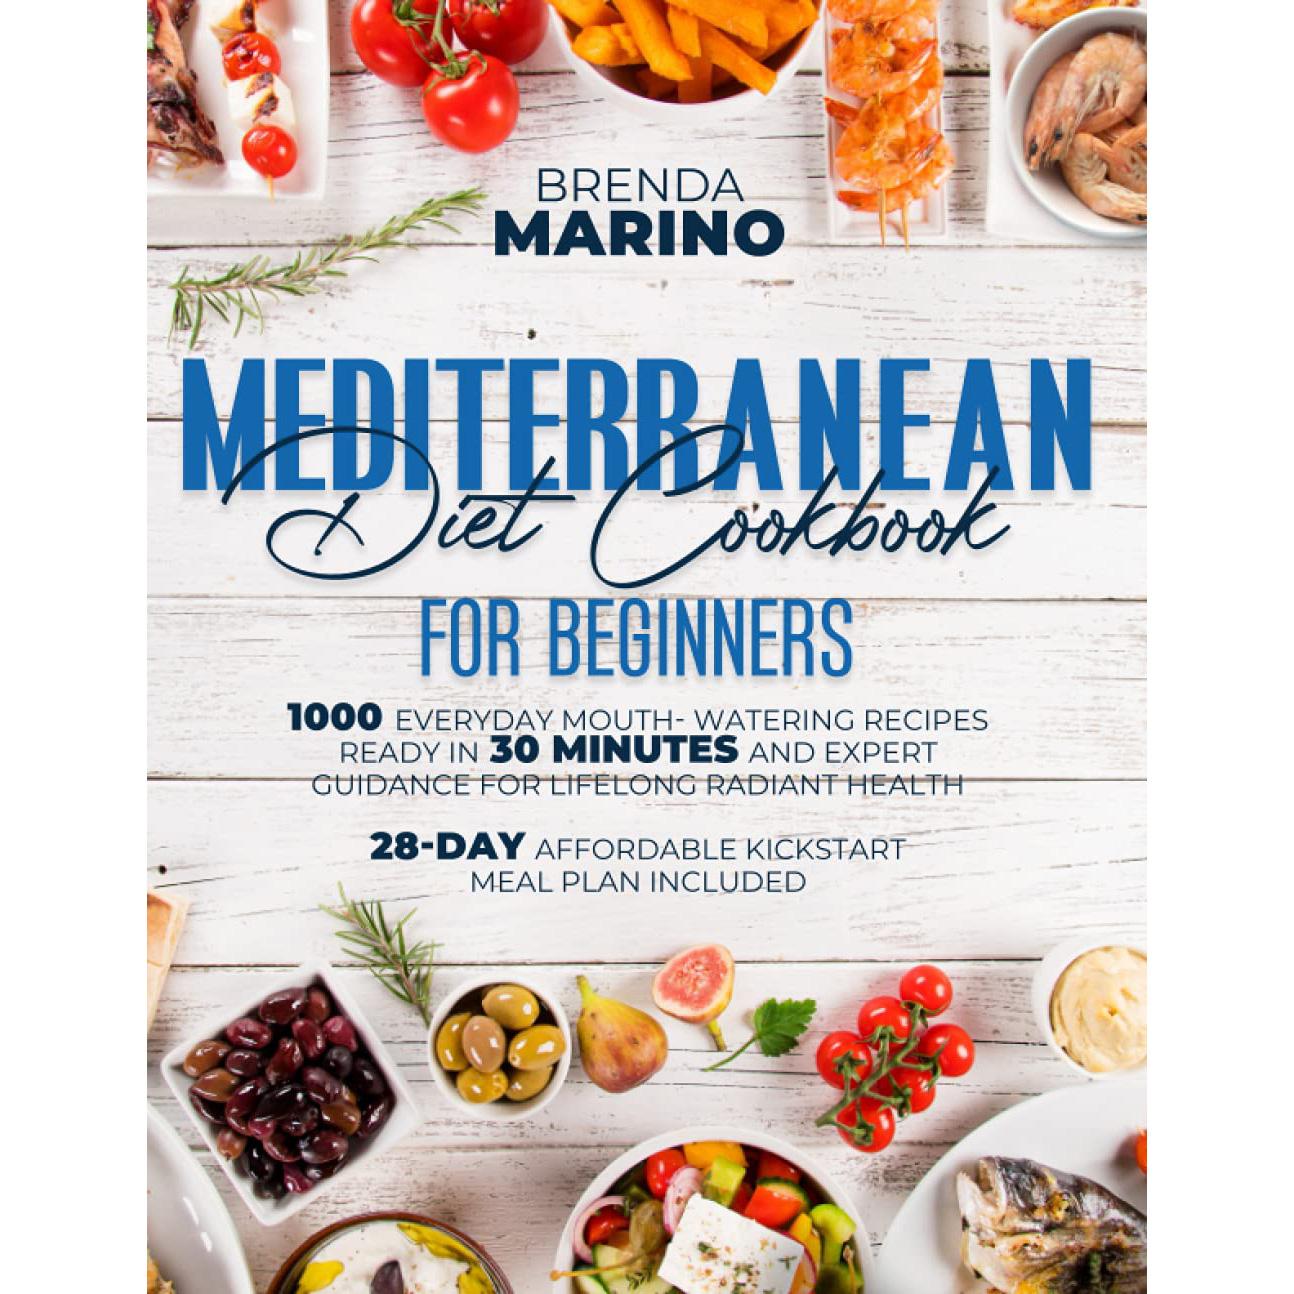 Mediterranean Diet Cookbook for Beginners for $1.36